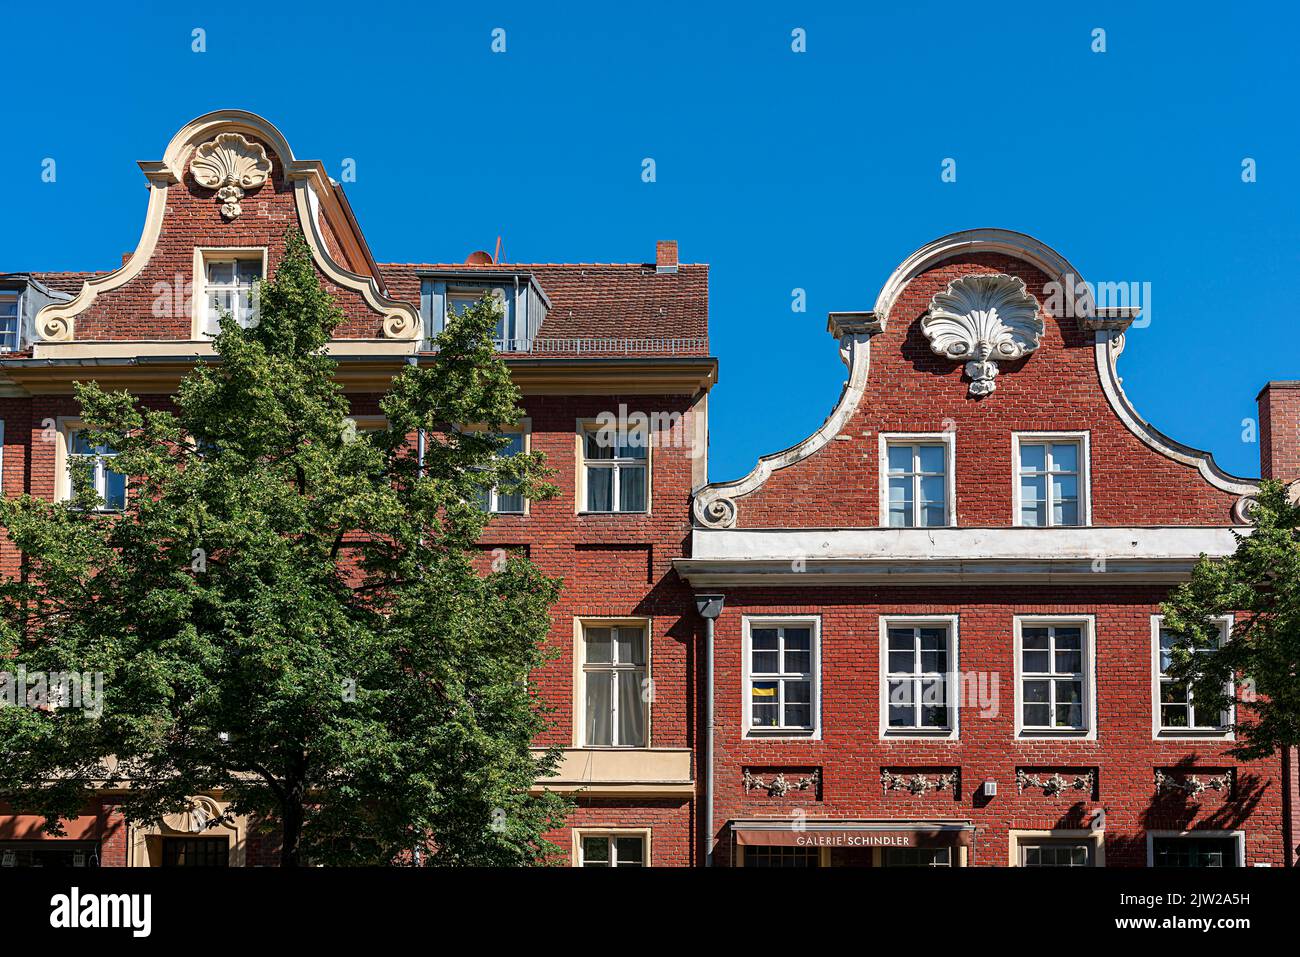 Hollaender Viertel, architecture in the old town of Potsdam, Brandenburg, Germany Stock Photo